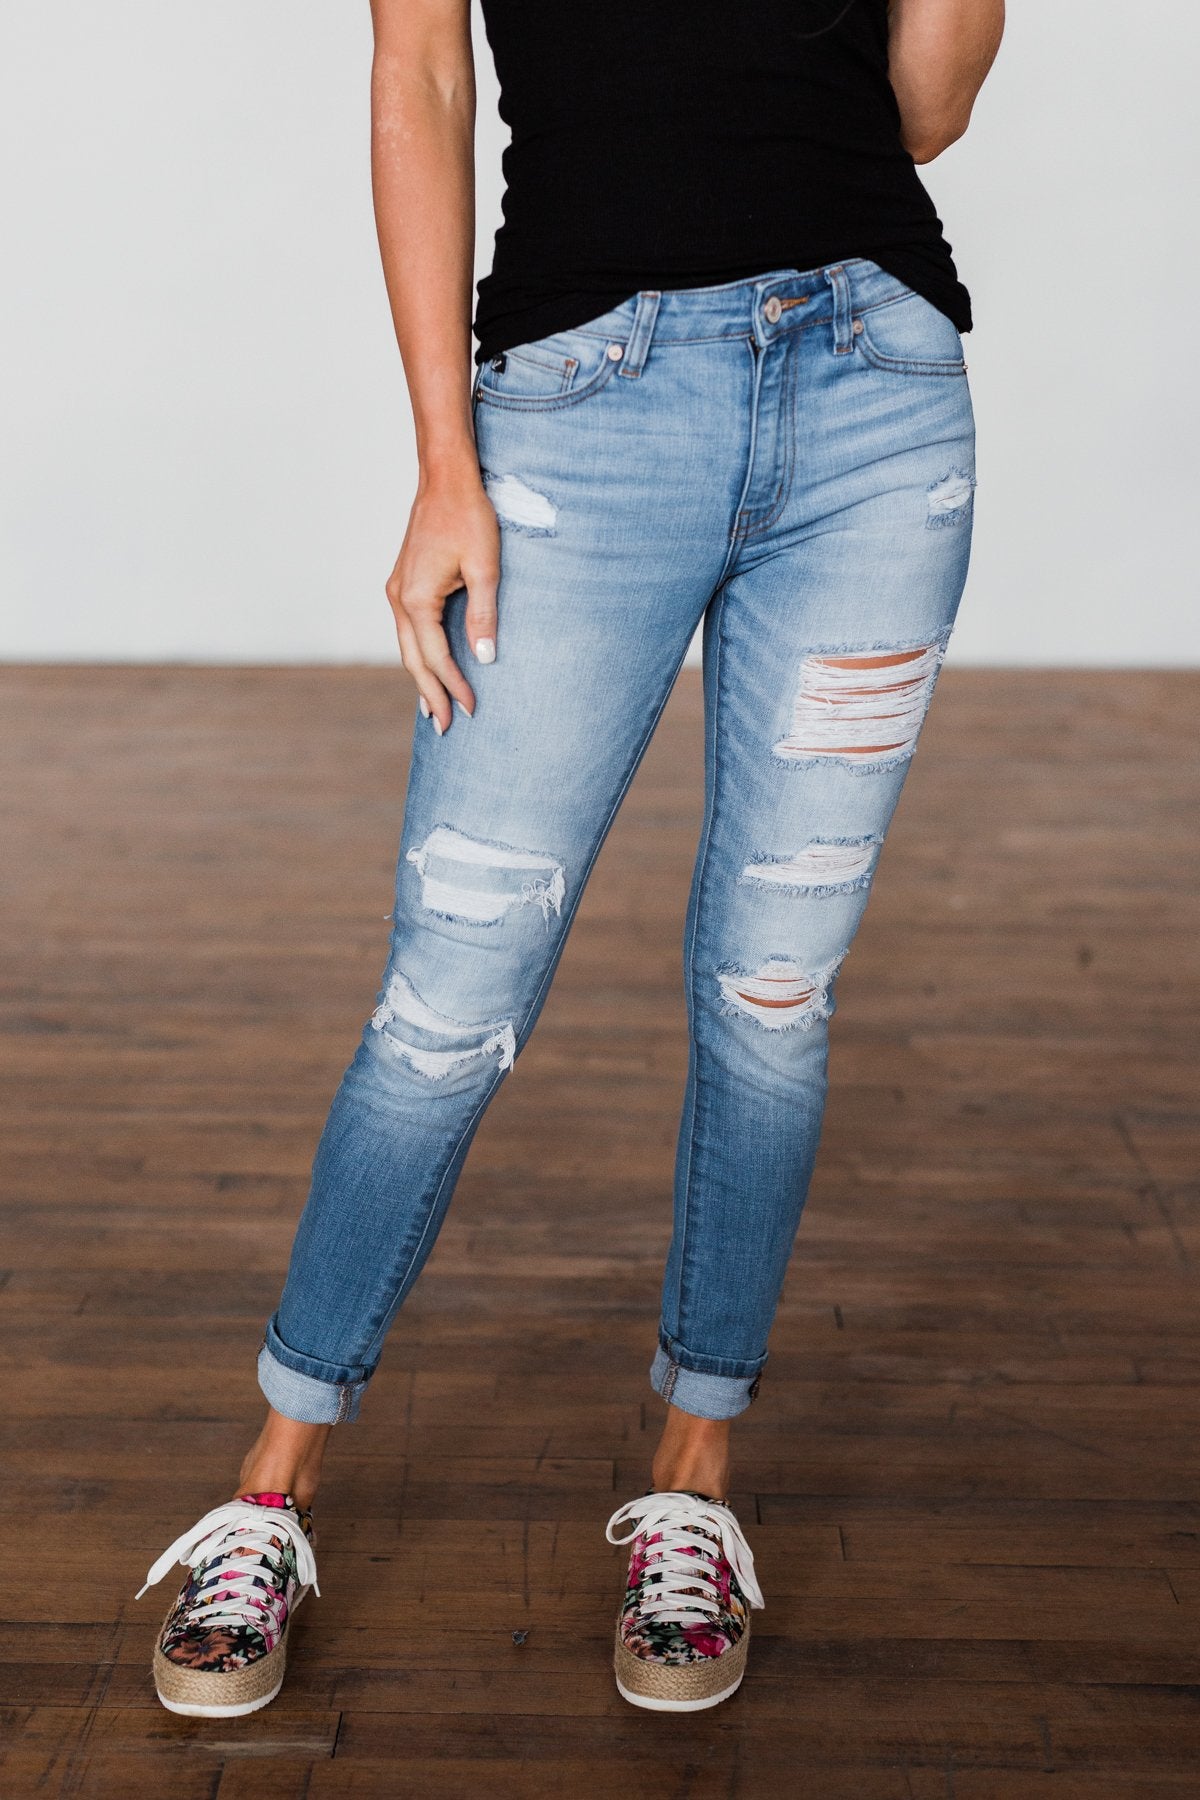 KanCan Distressed Skinny Jeans- Rosalie Wash